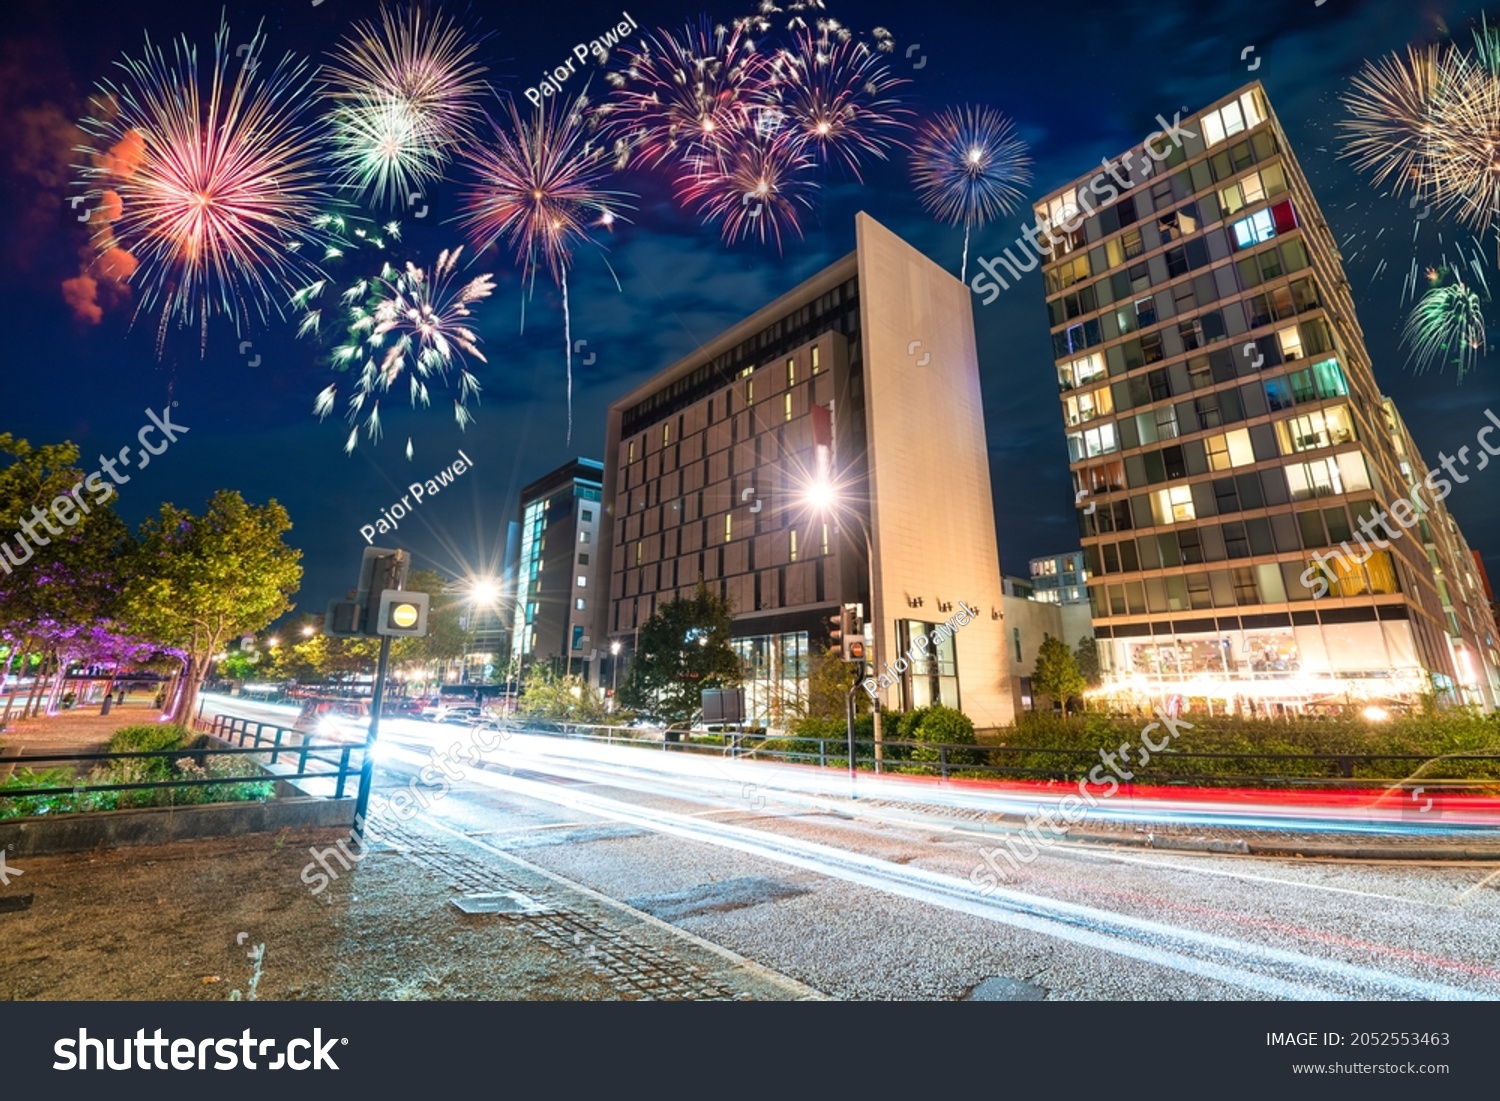 Fireworks display at Milton Keynes city centre at dusk. England #2052553463